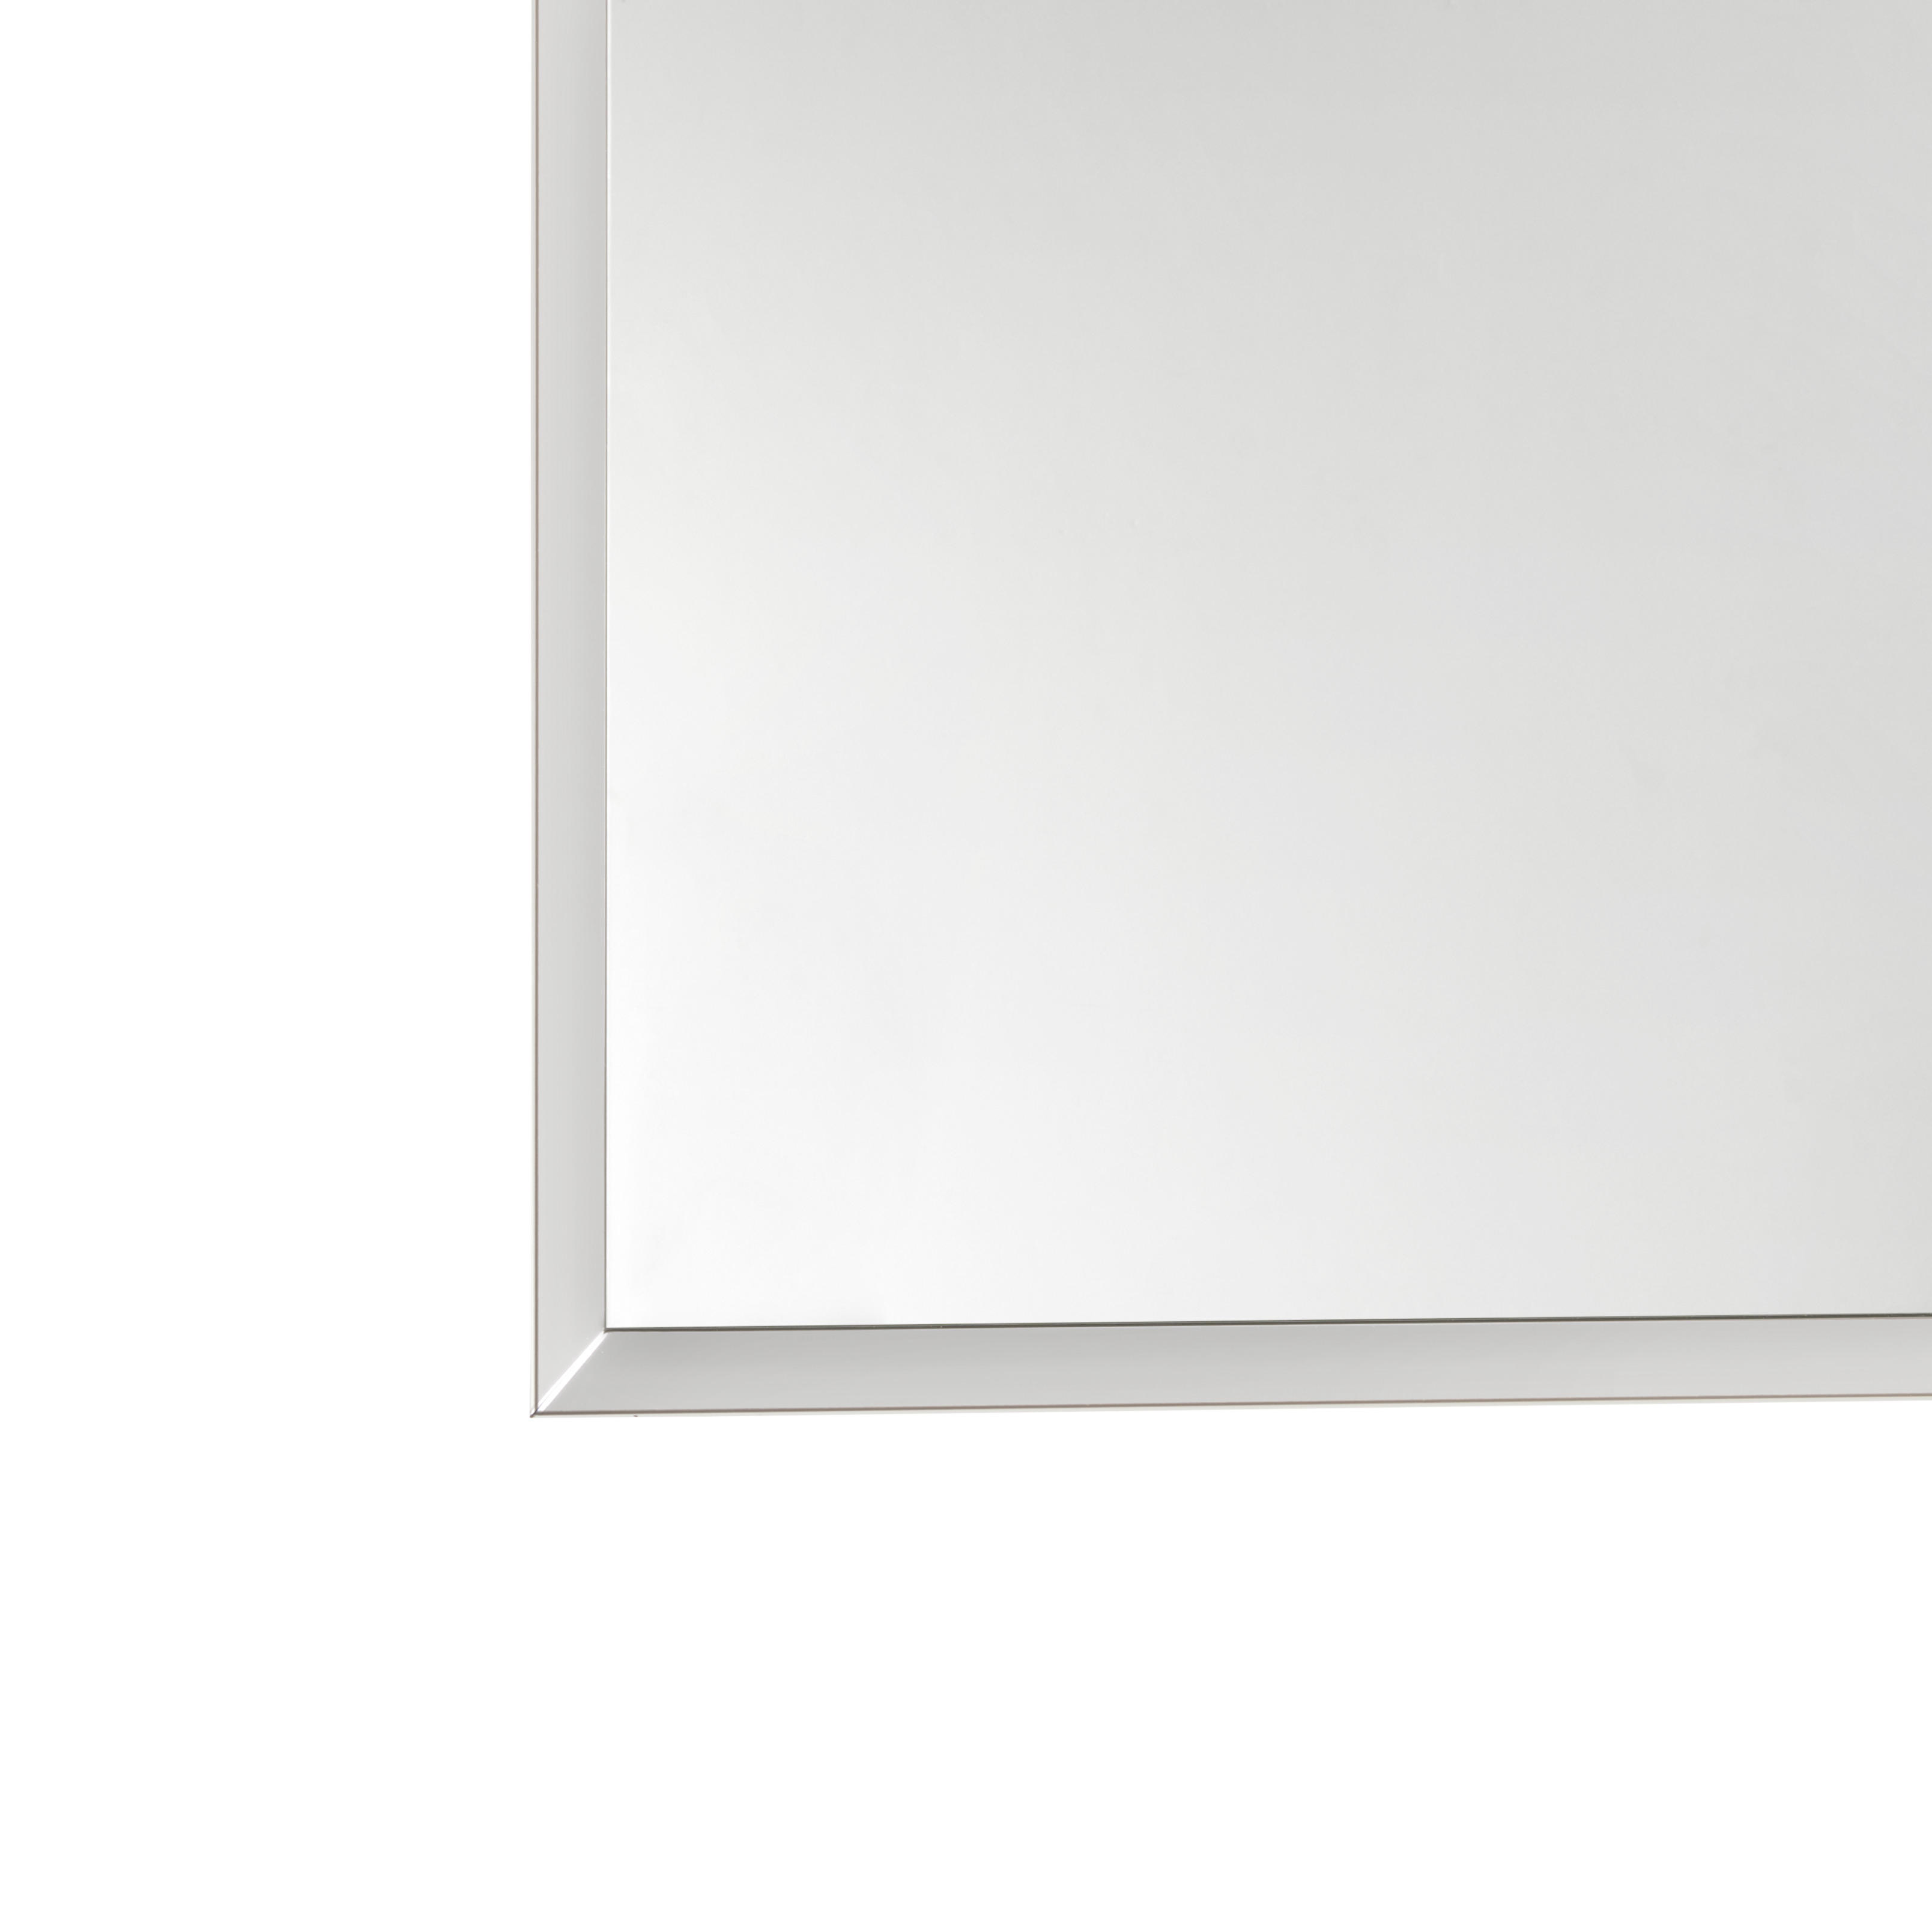 WANDSPIEGEL Silberfarben  - Silberfarben/Alufarben, Design, Glas/Metall (41/141/2cm) - Xora